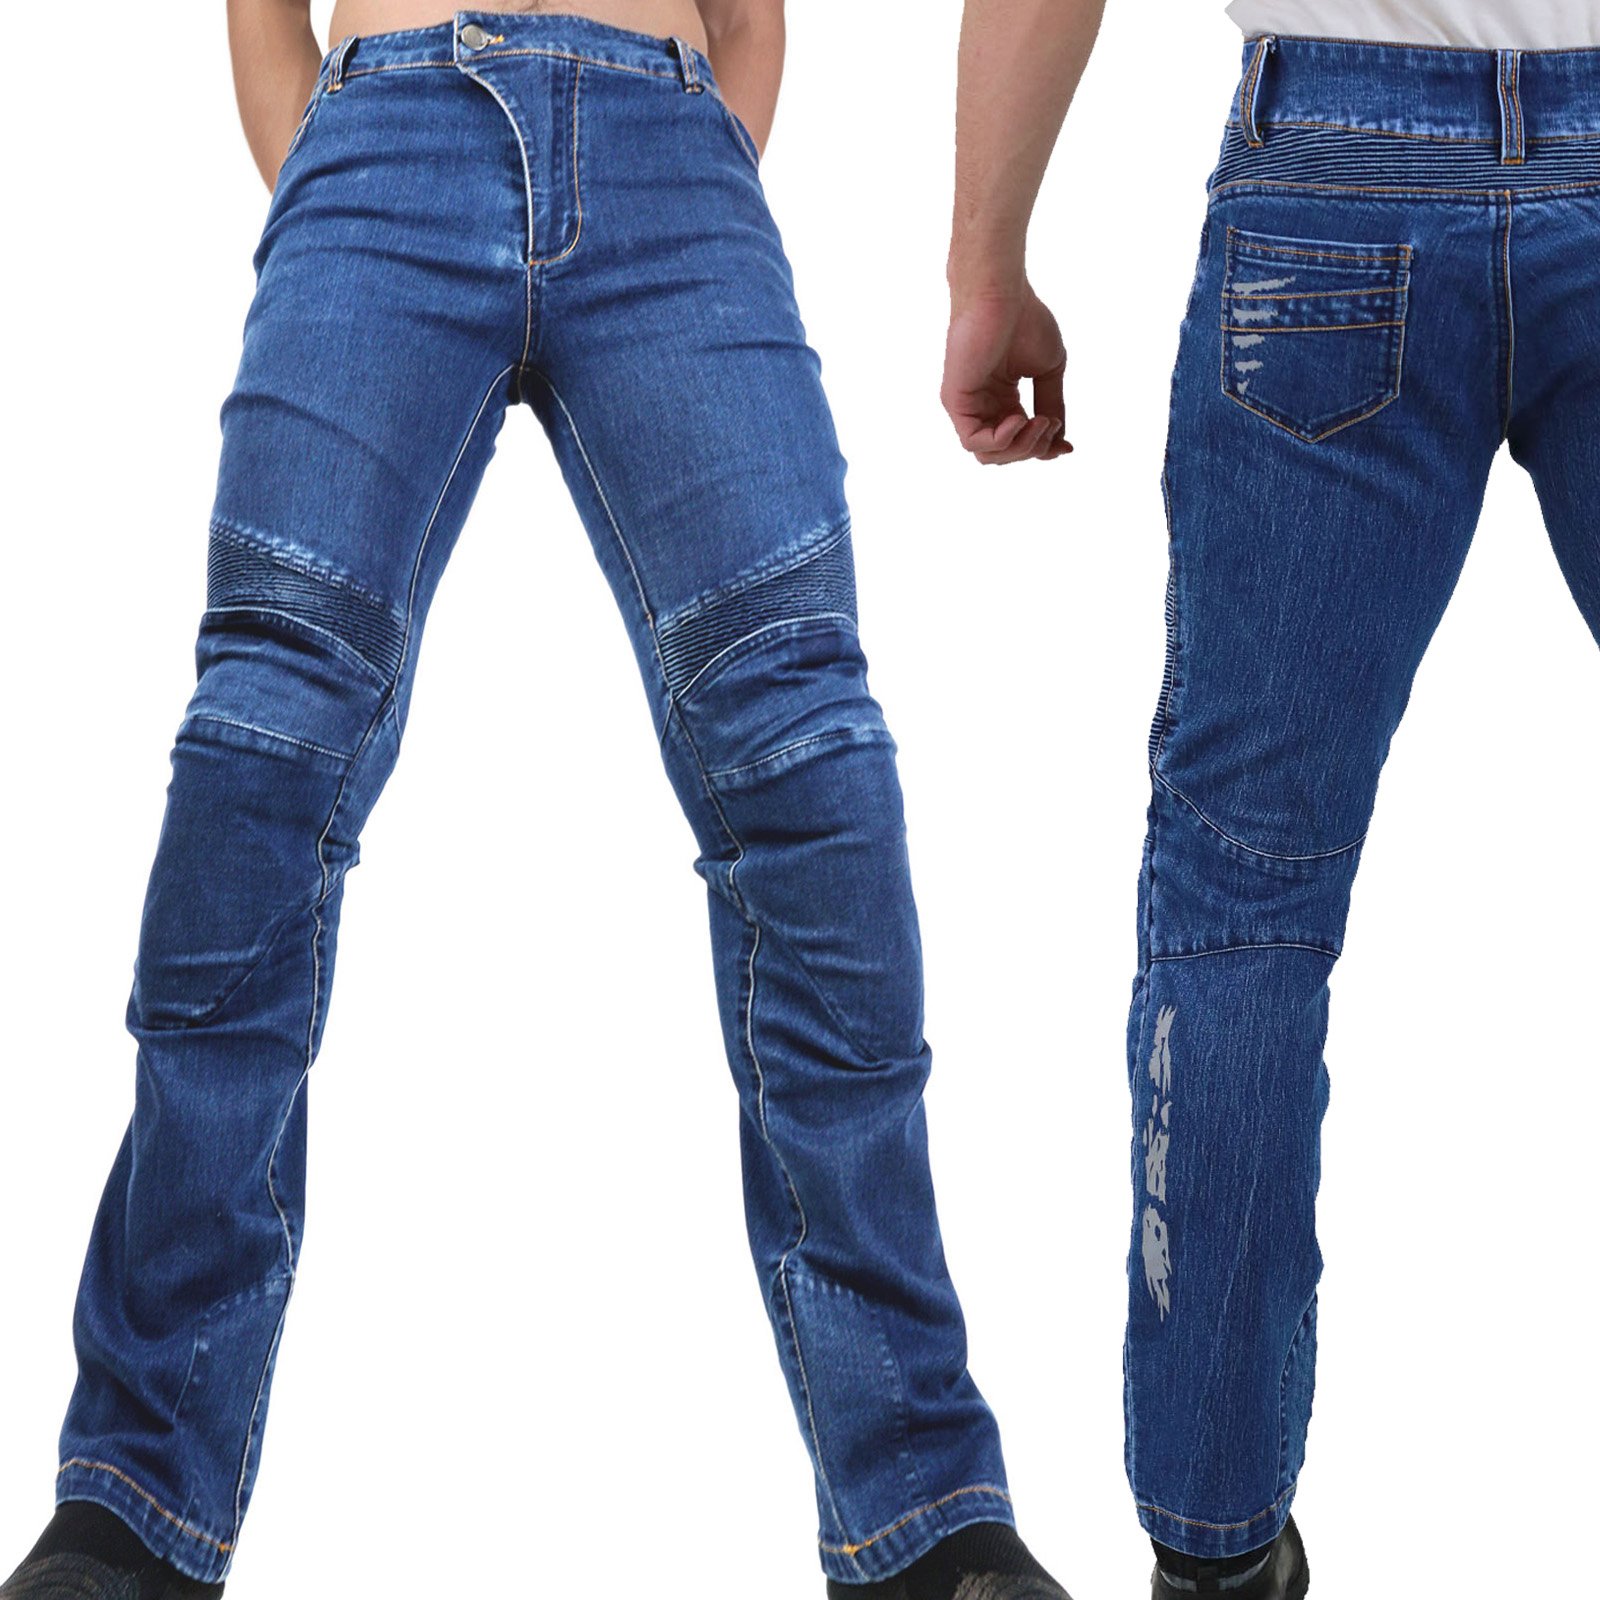 Motorradhose Jeans -Ranger- Leicht Dünn Herren Sommer Textil Jeanshose Slim Fit Motorrad Textilhose Männer Eng Stretch - blau - M von Nerve Shop